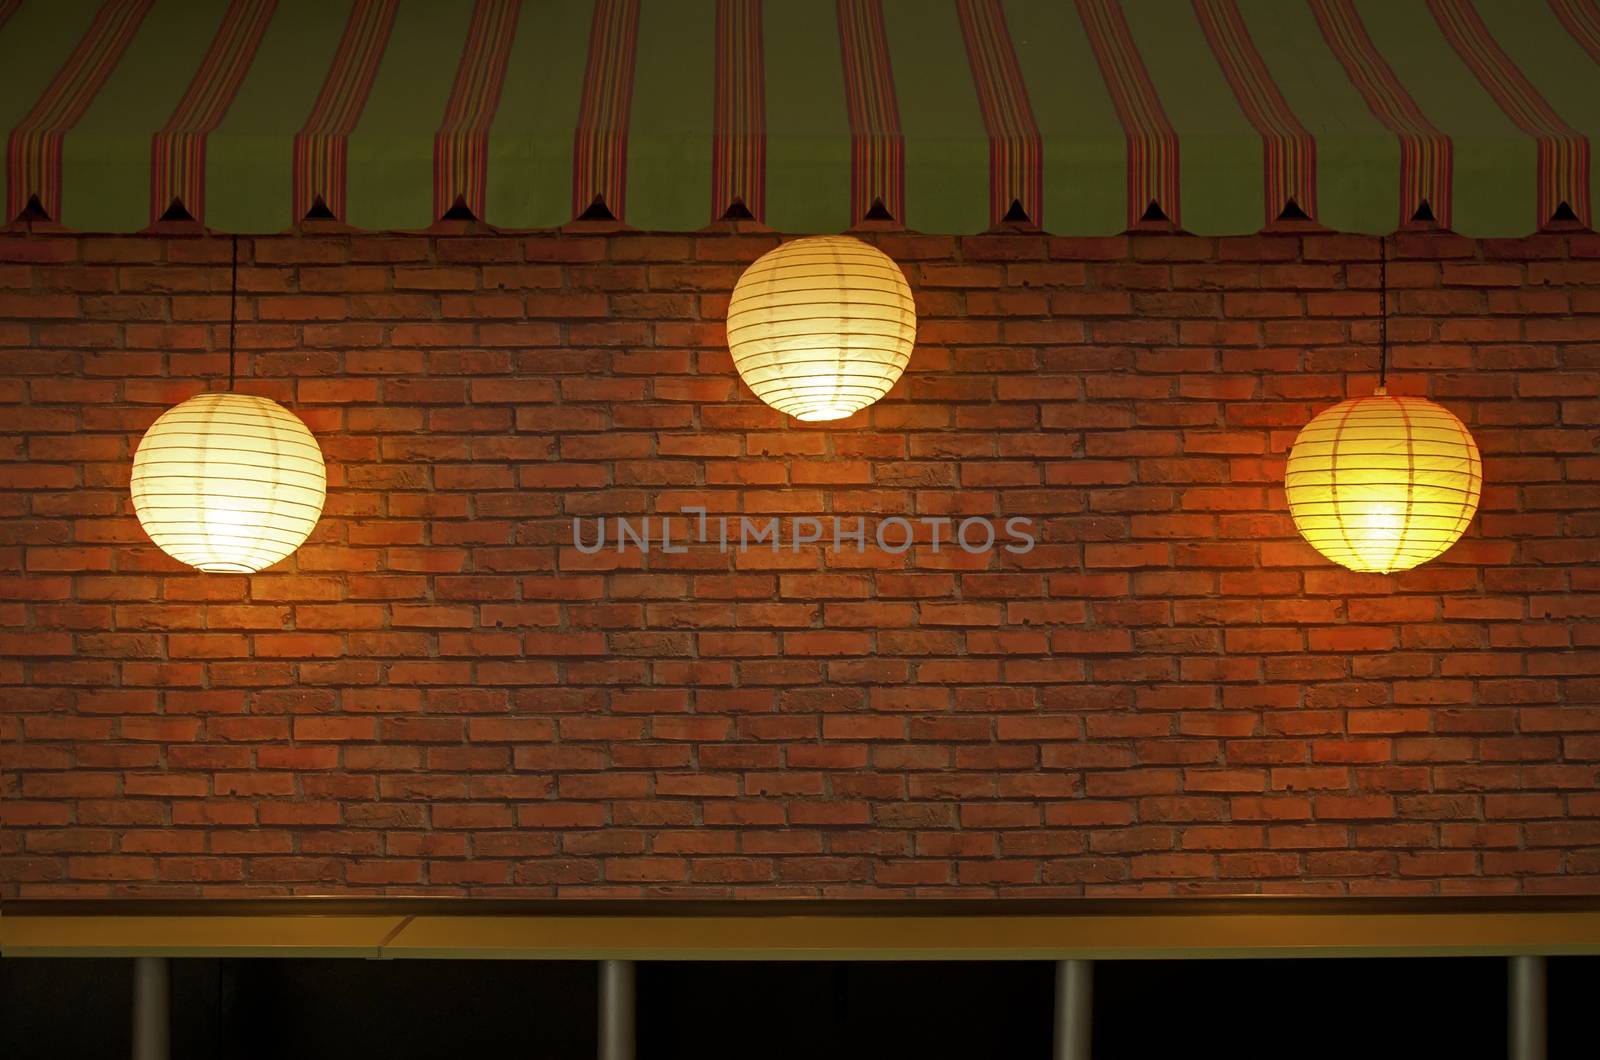 Brick wall with three illuminated lamps by deyan_georgiev